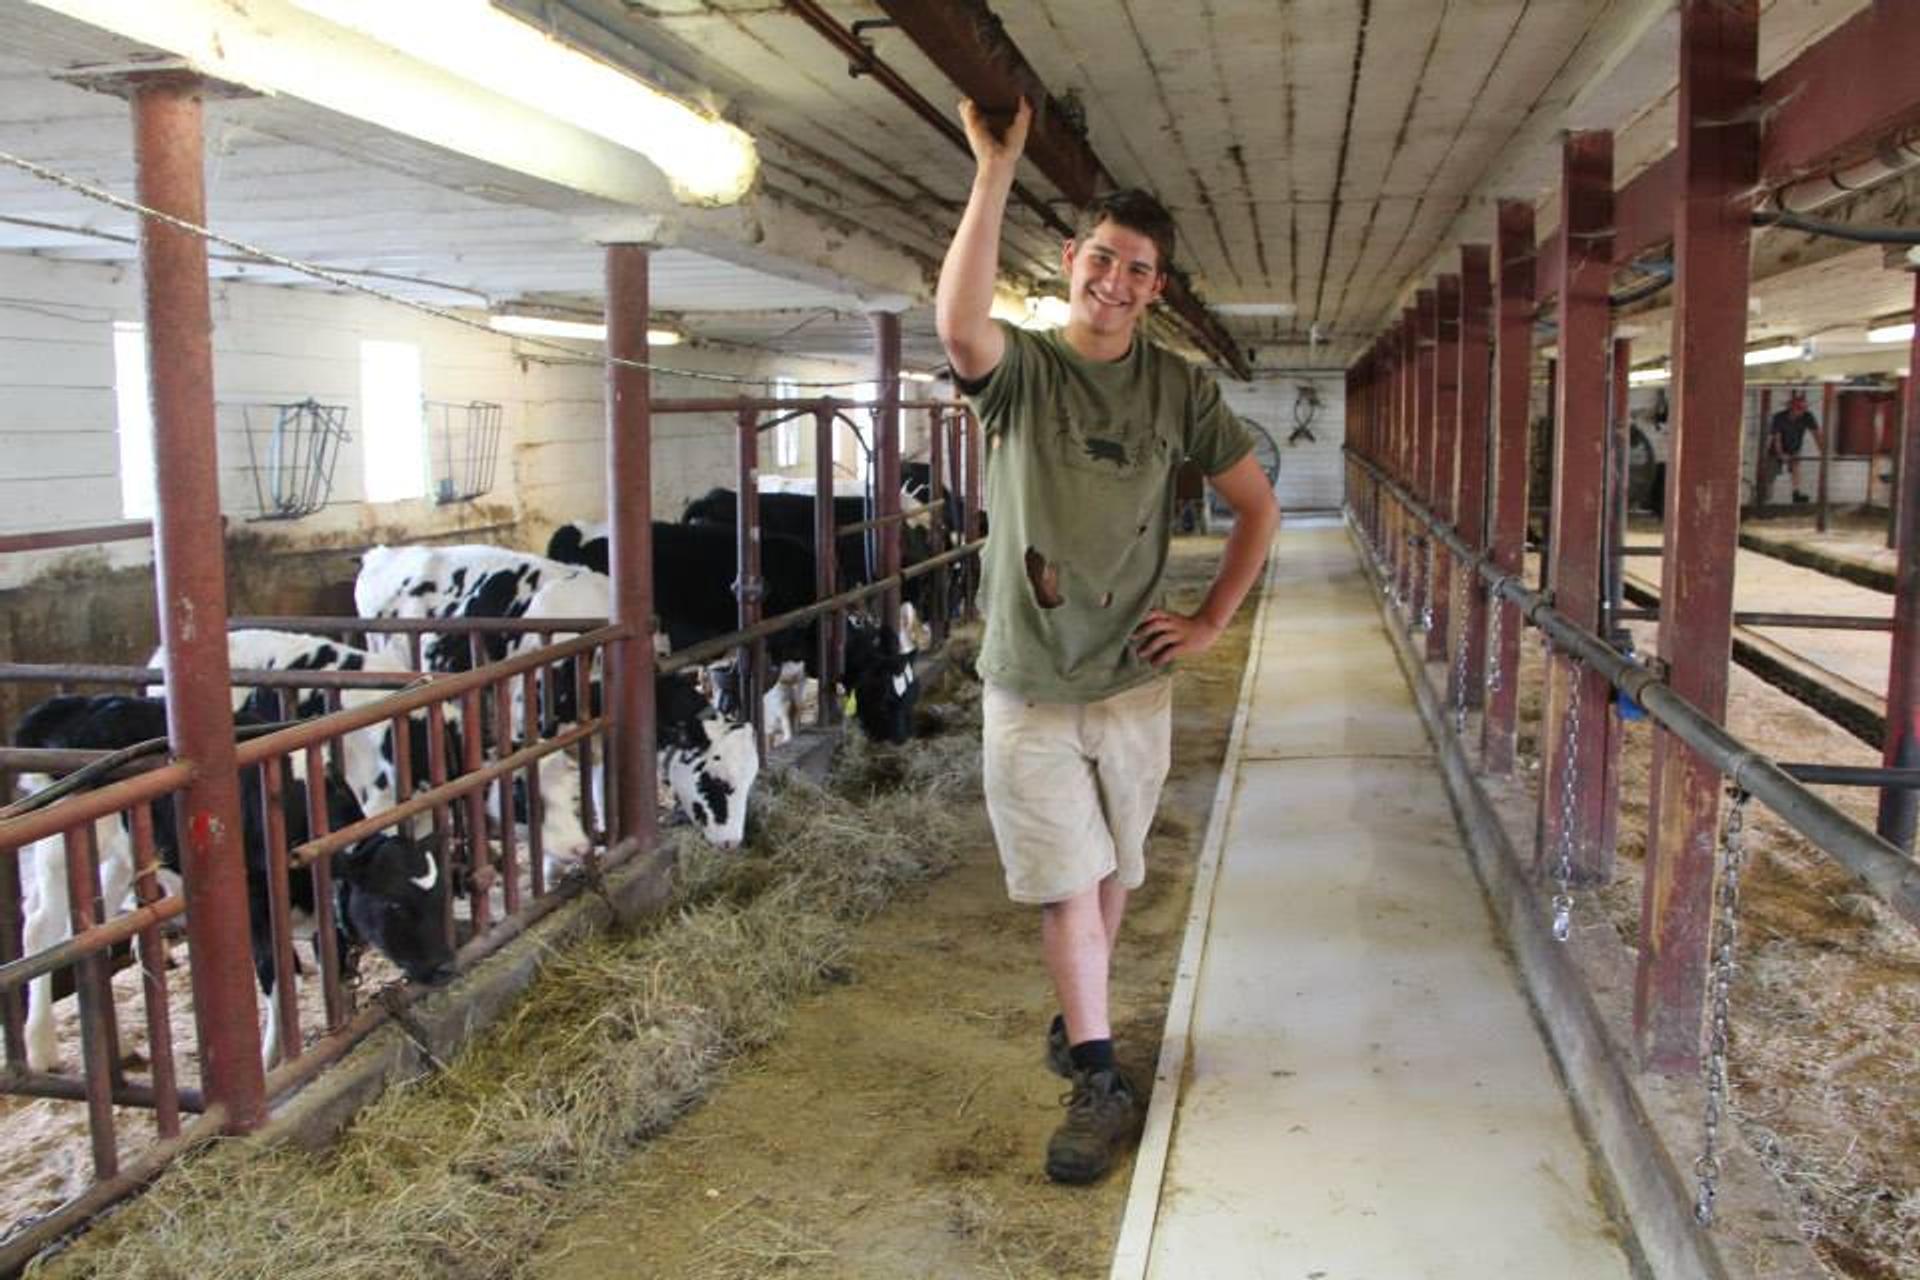 Sebastien Latraverse stands in the barn as cows eat.